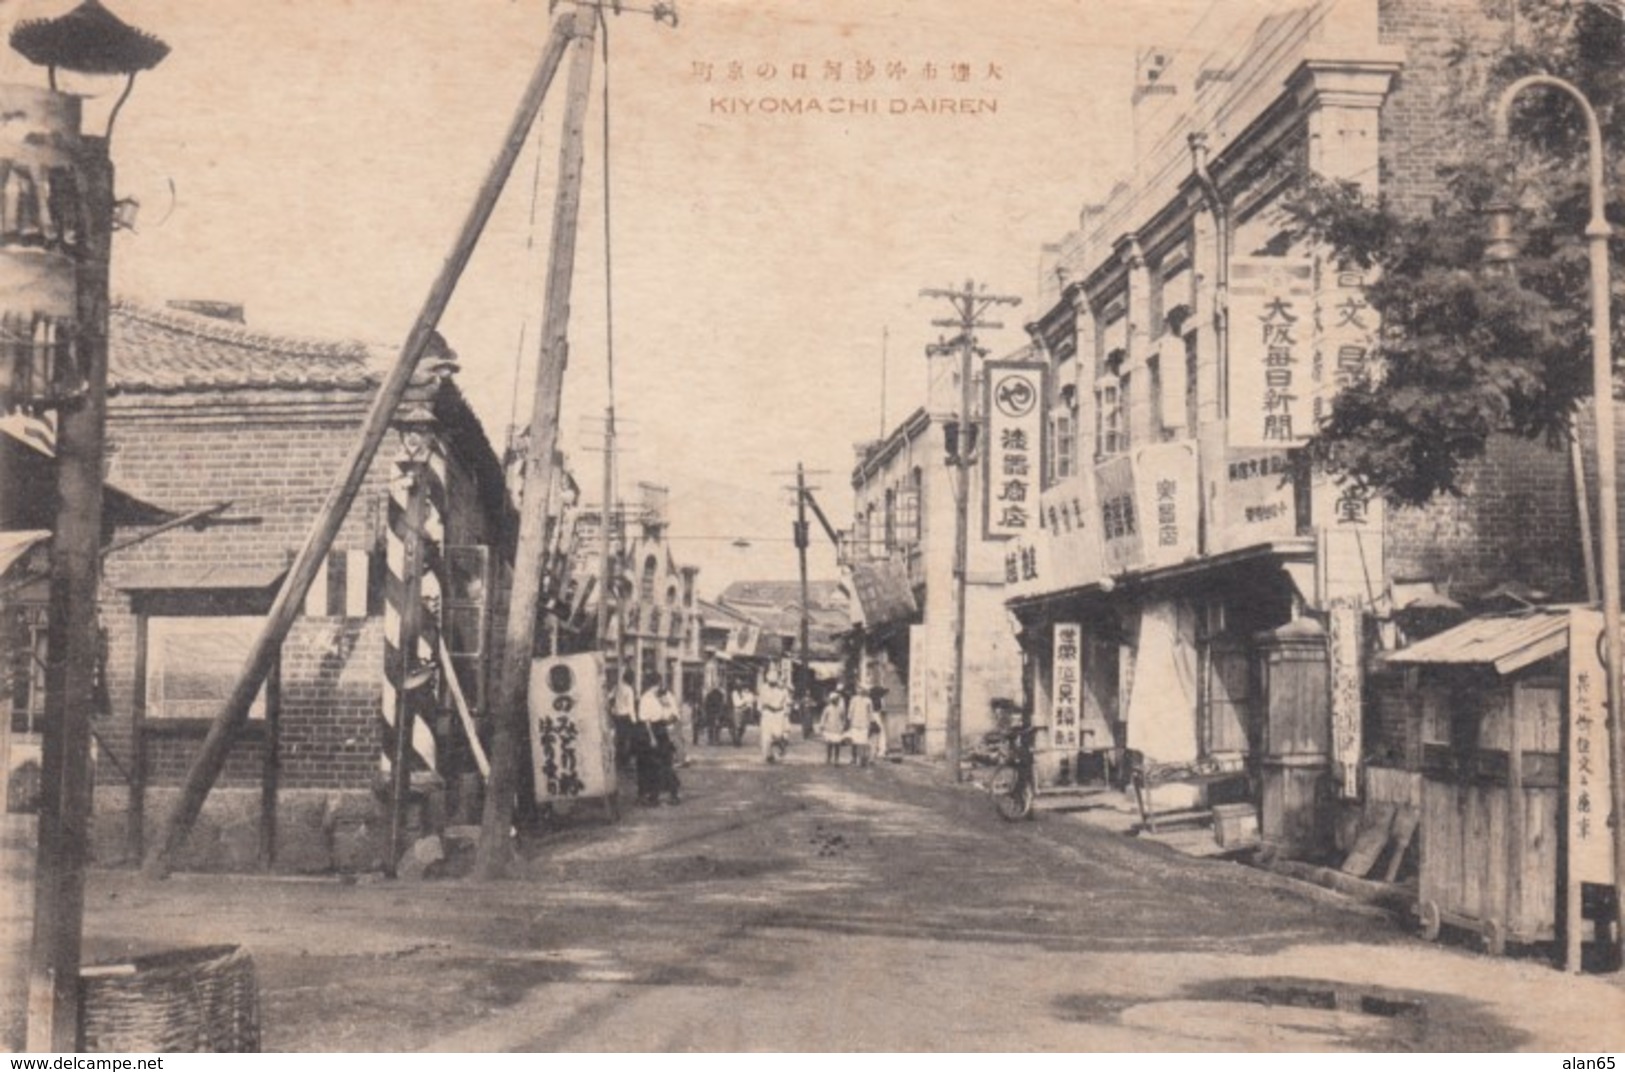 Dairen (now Dalian) China, Kiyomachi Street Scene C1900s/10s Vintage Postcard - China